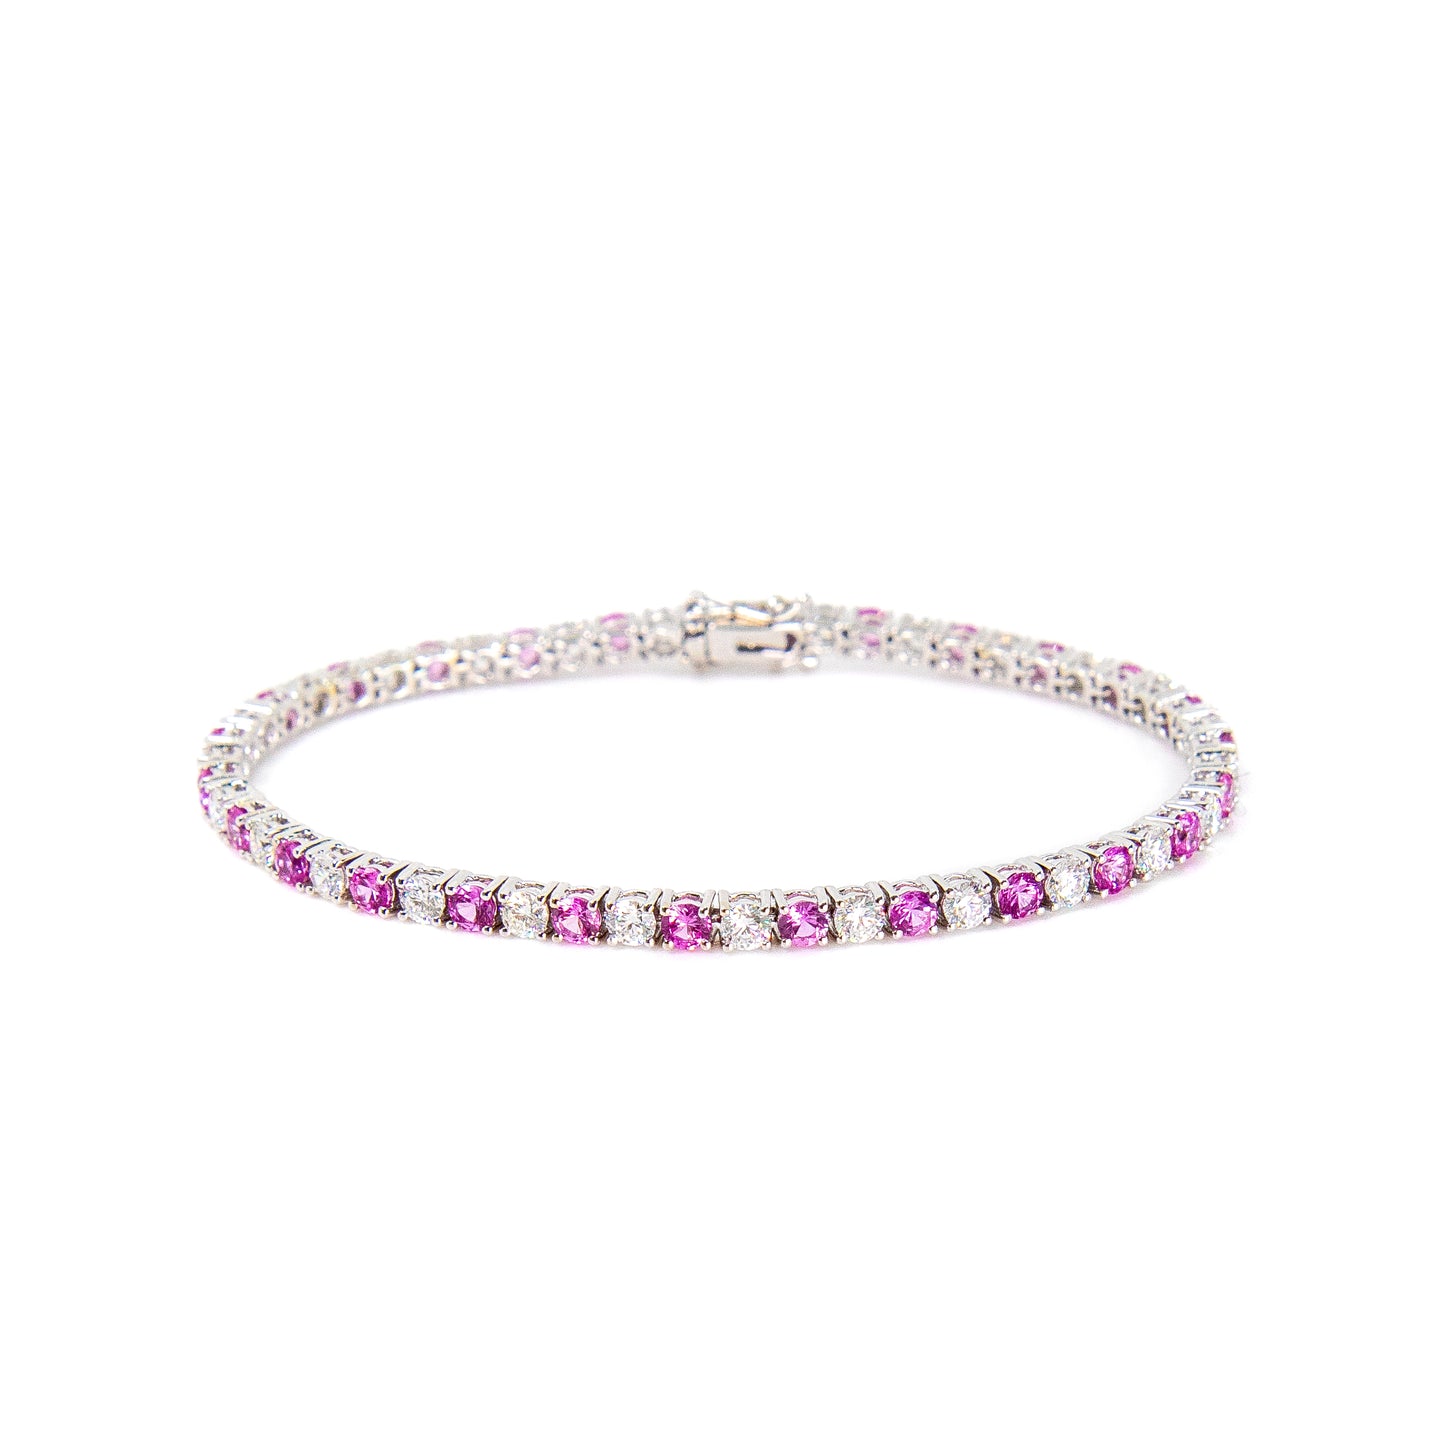 Diamond and pink sapphire tennis bracelet